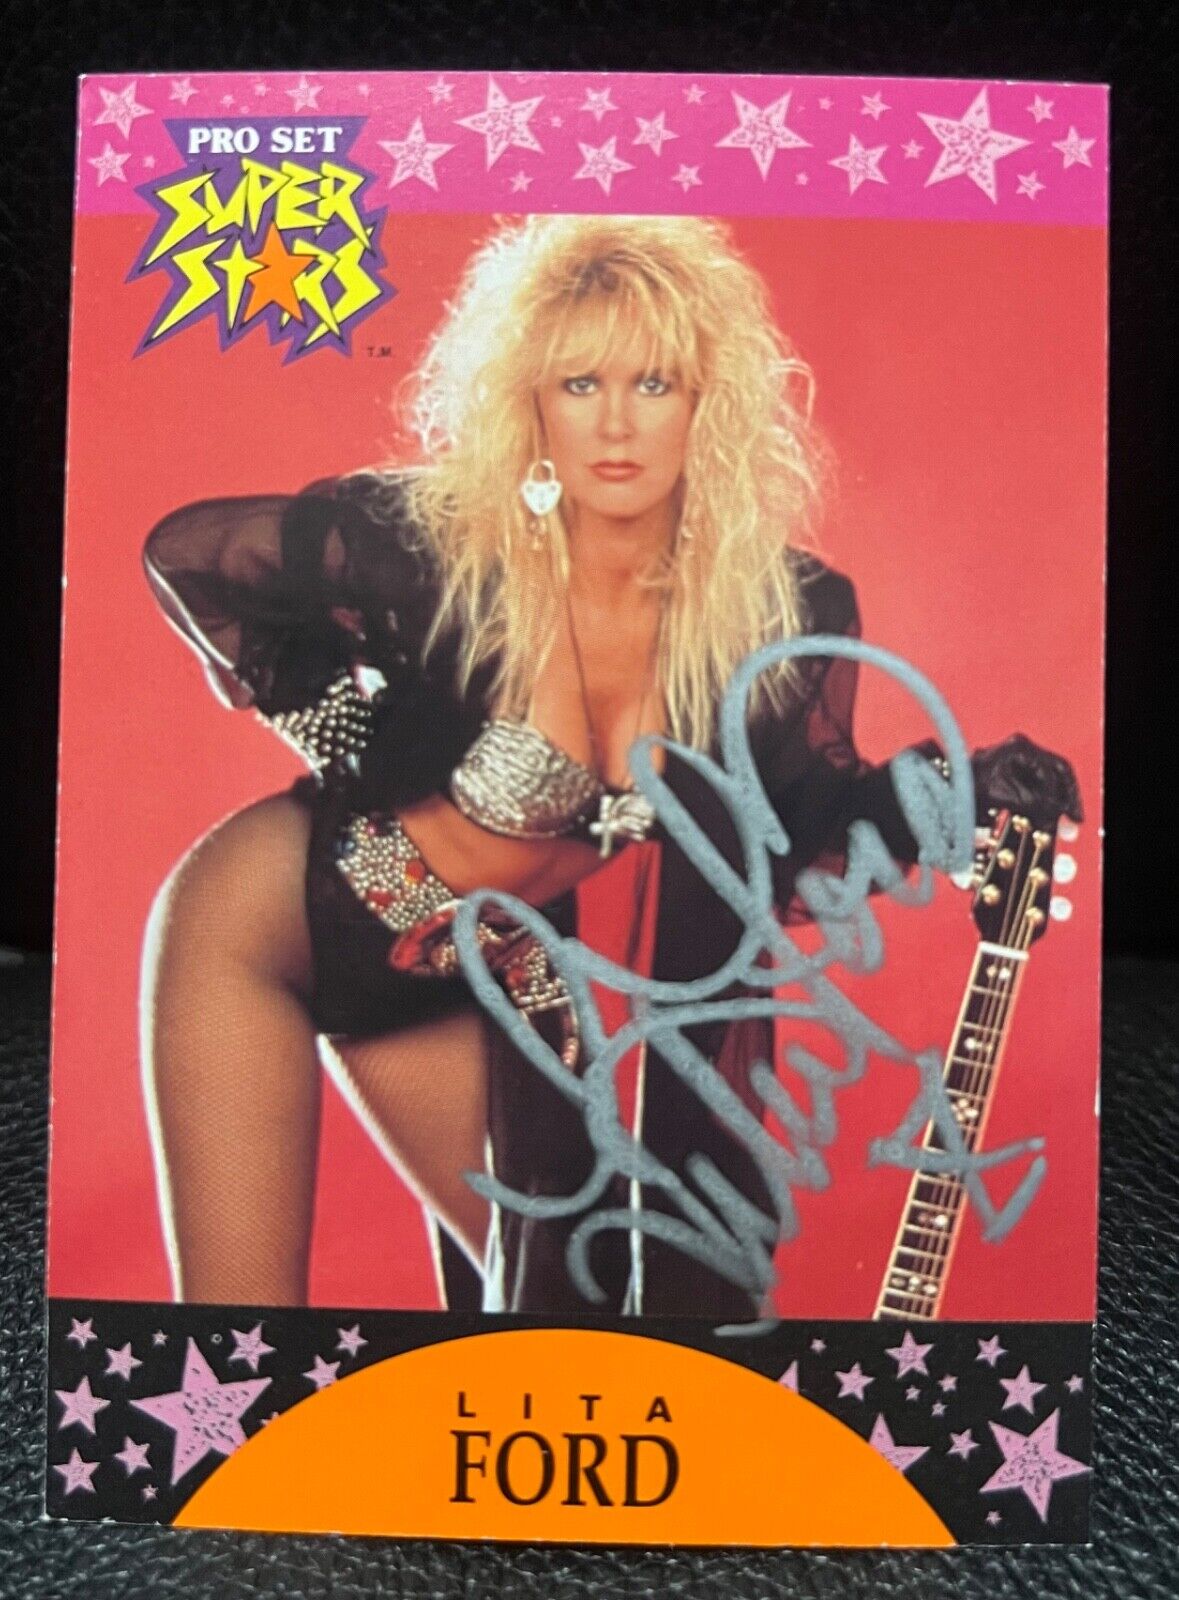 Lira Ford autograph 1991 Proset Super Stars Music Cards rare Promo card